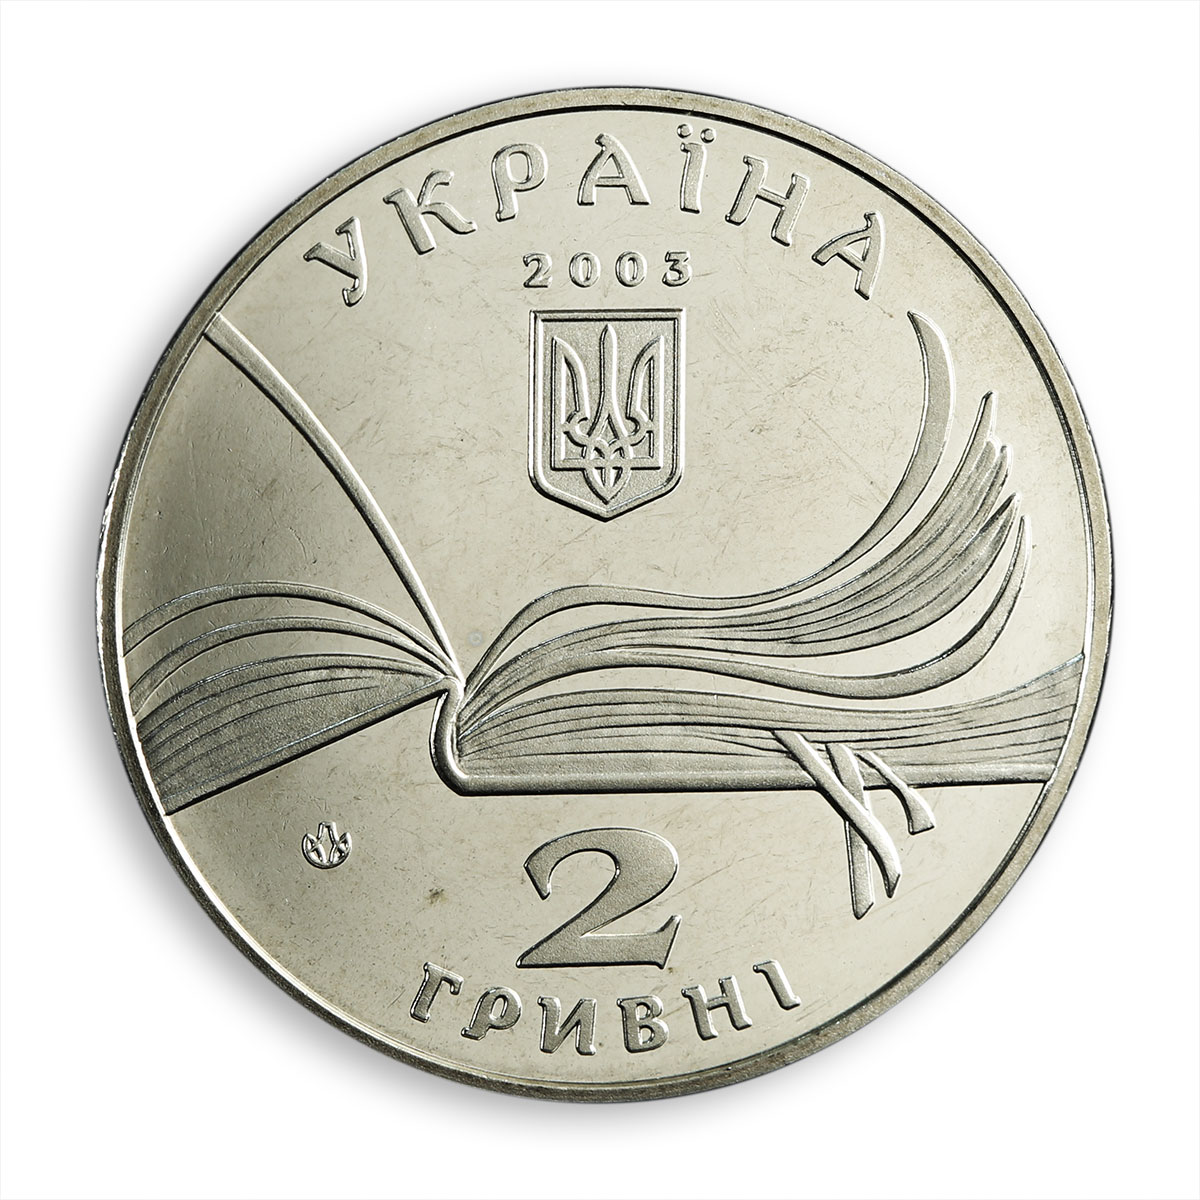 Ukraine 2 hryvnia Volodymyr Vladimir Korolenko writer publicist nickel coin 2003